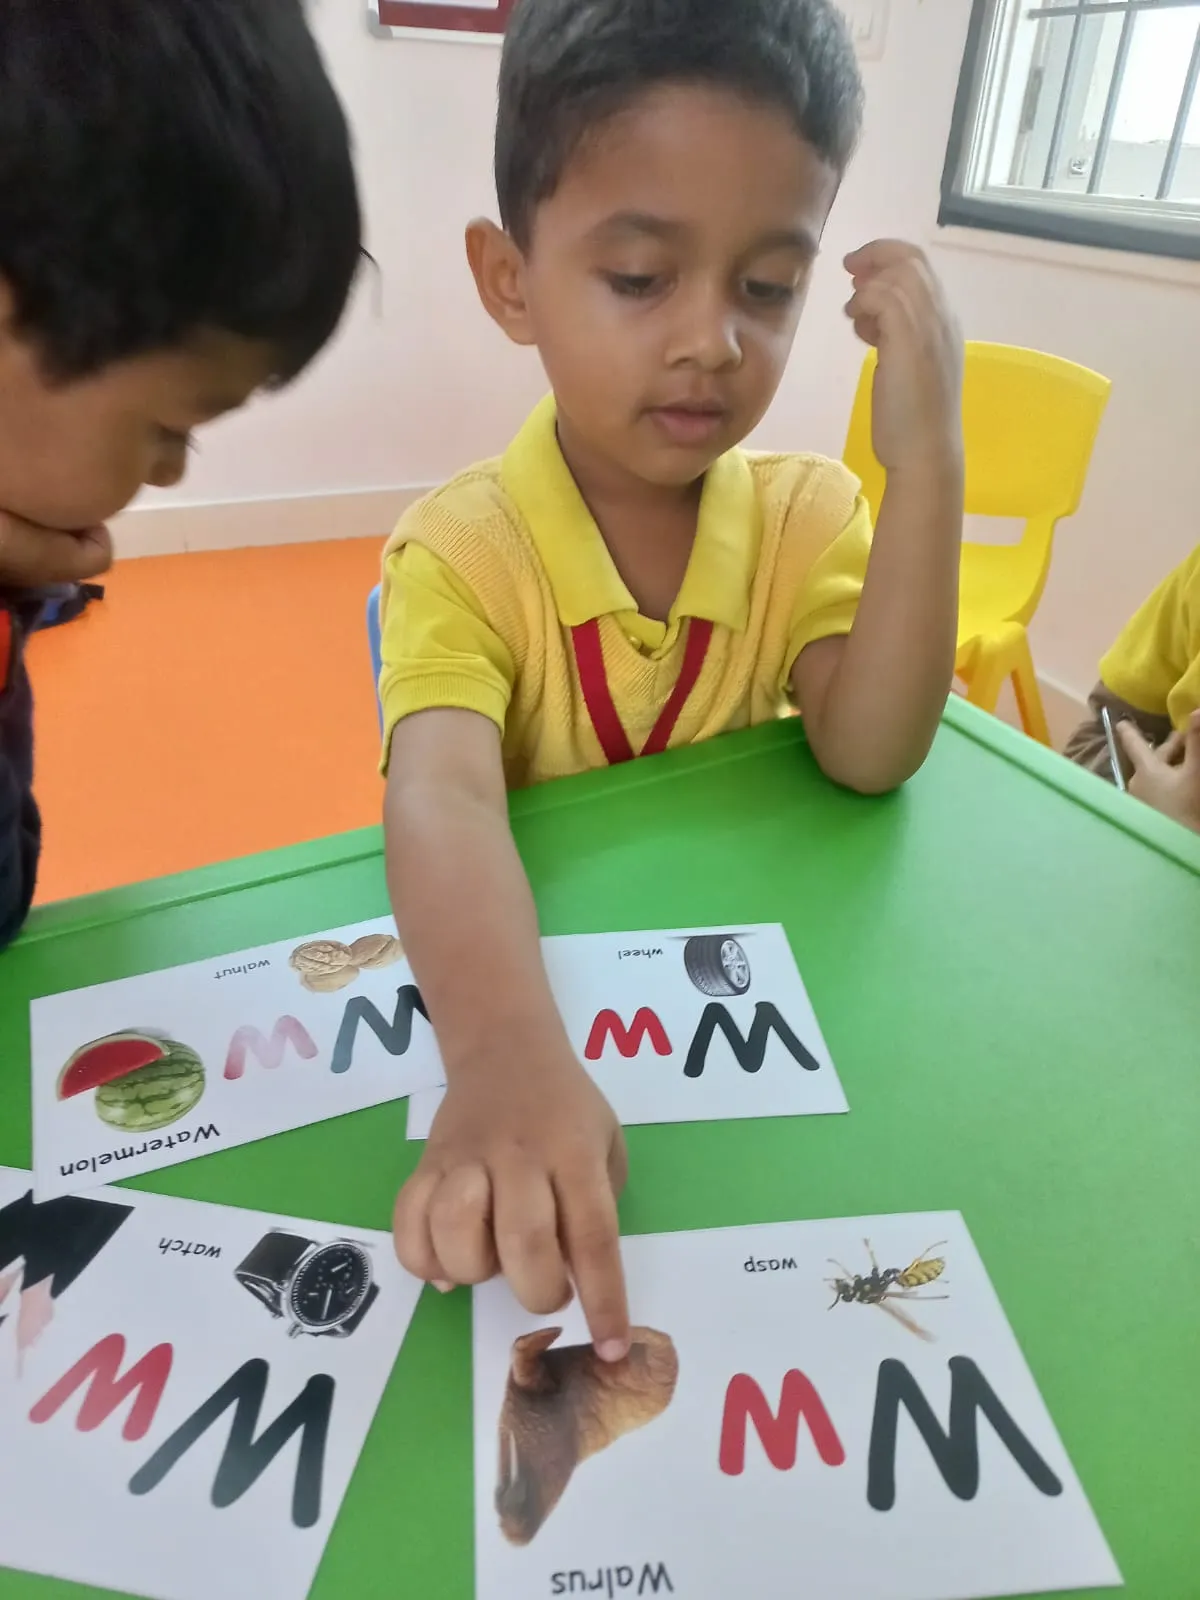 Children learning letters